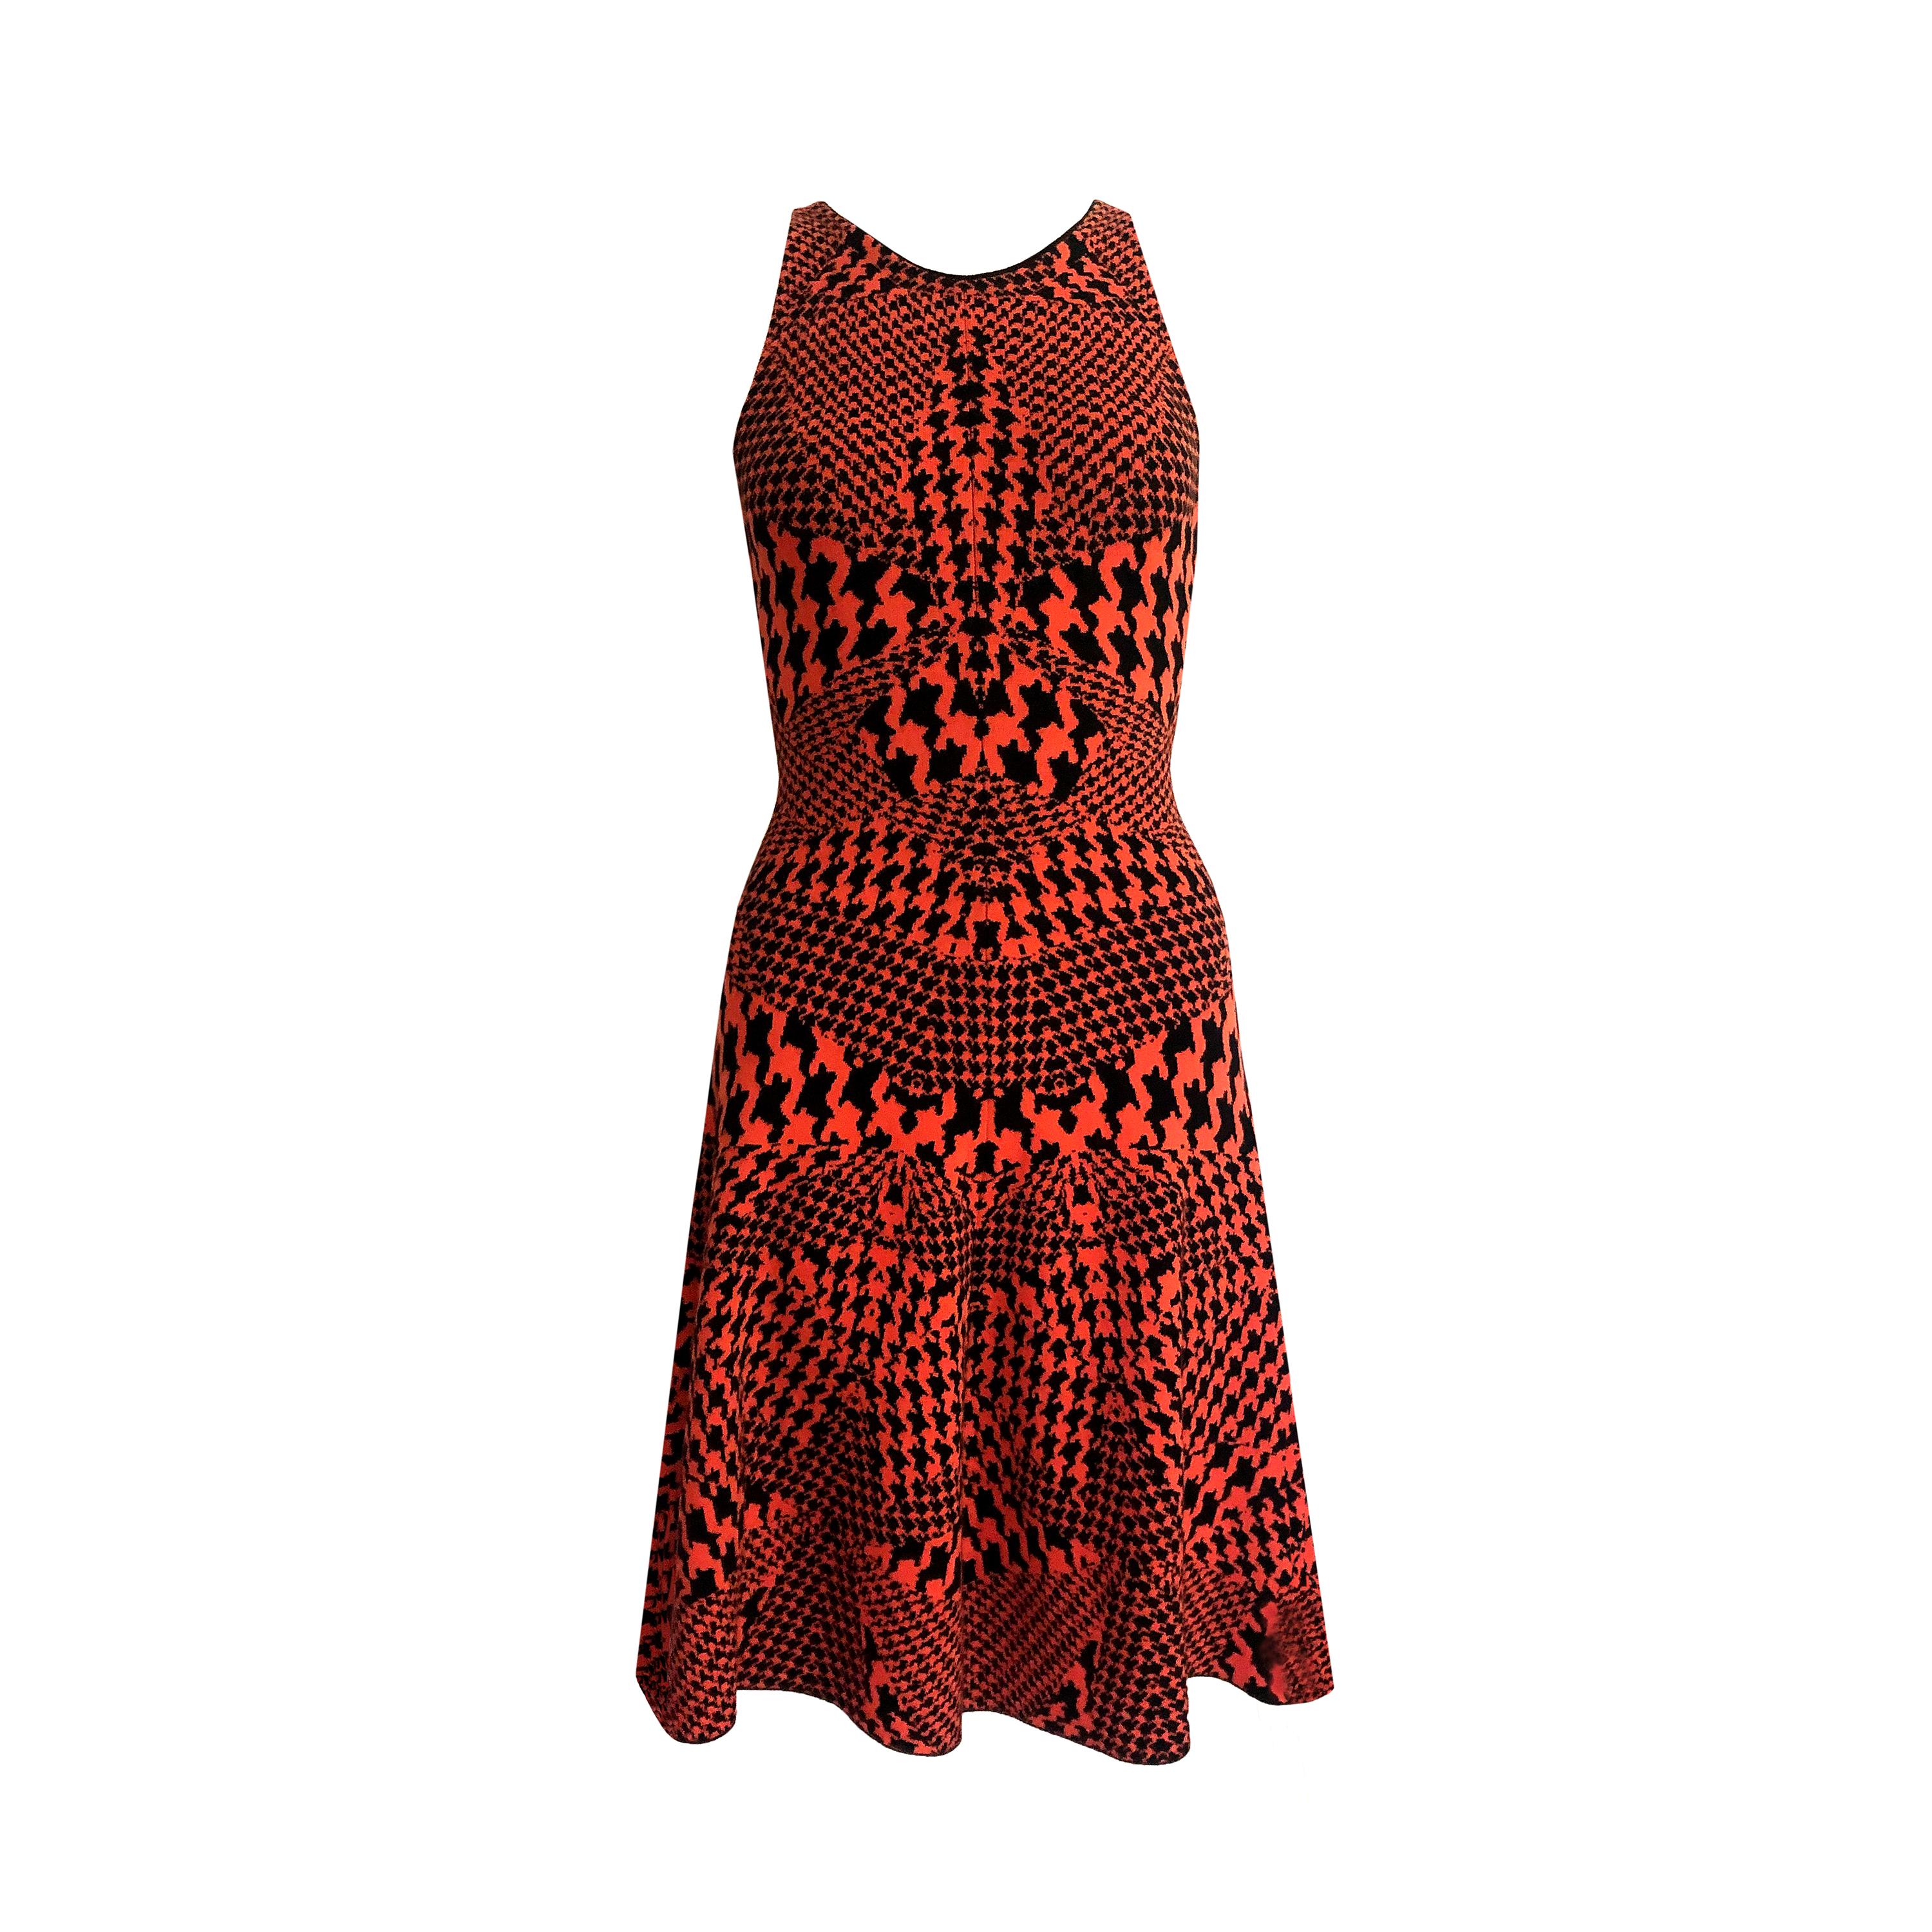 Alexander McQueen Dress - Multi Dogtooth Knit - Burnt Orange + Black For Sale 3